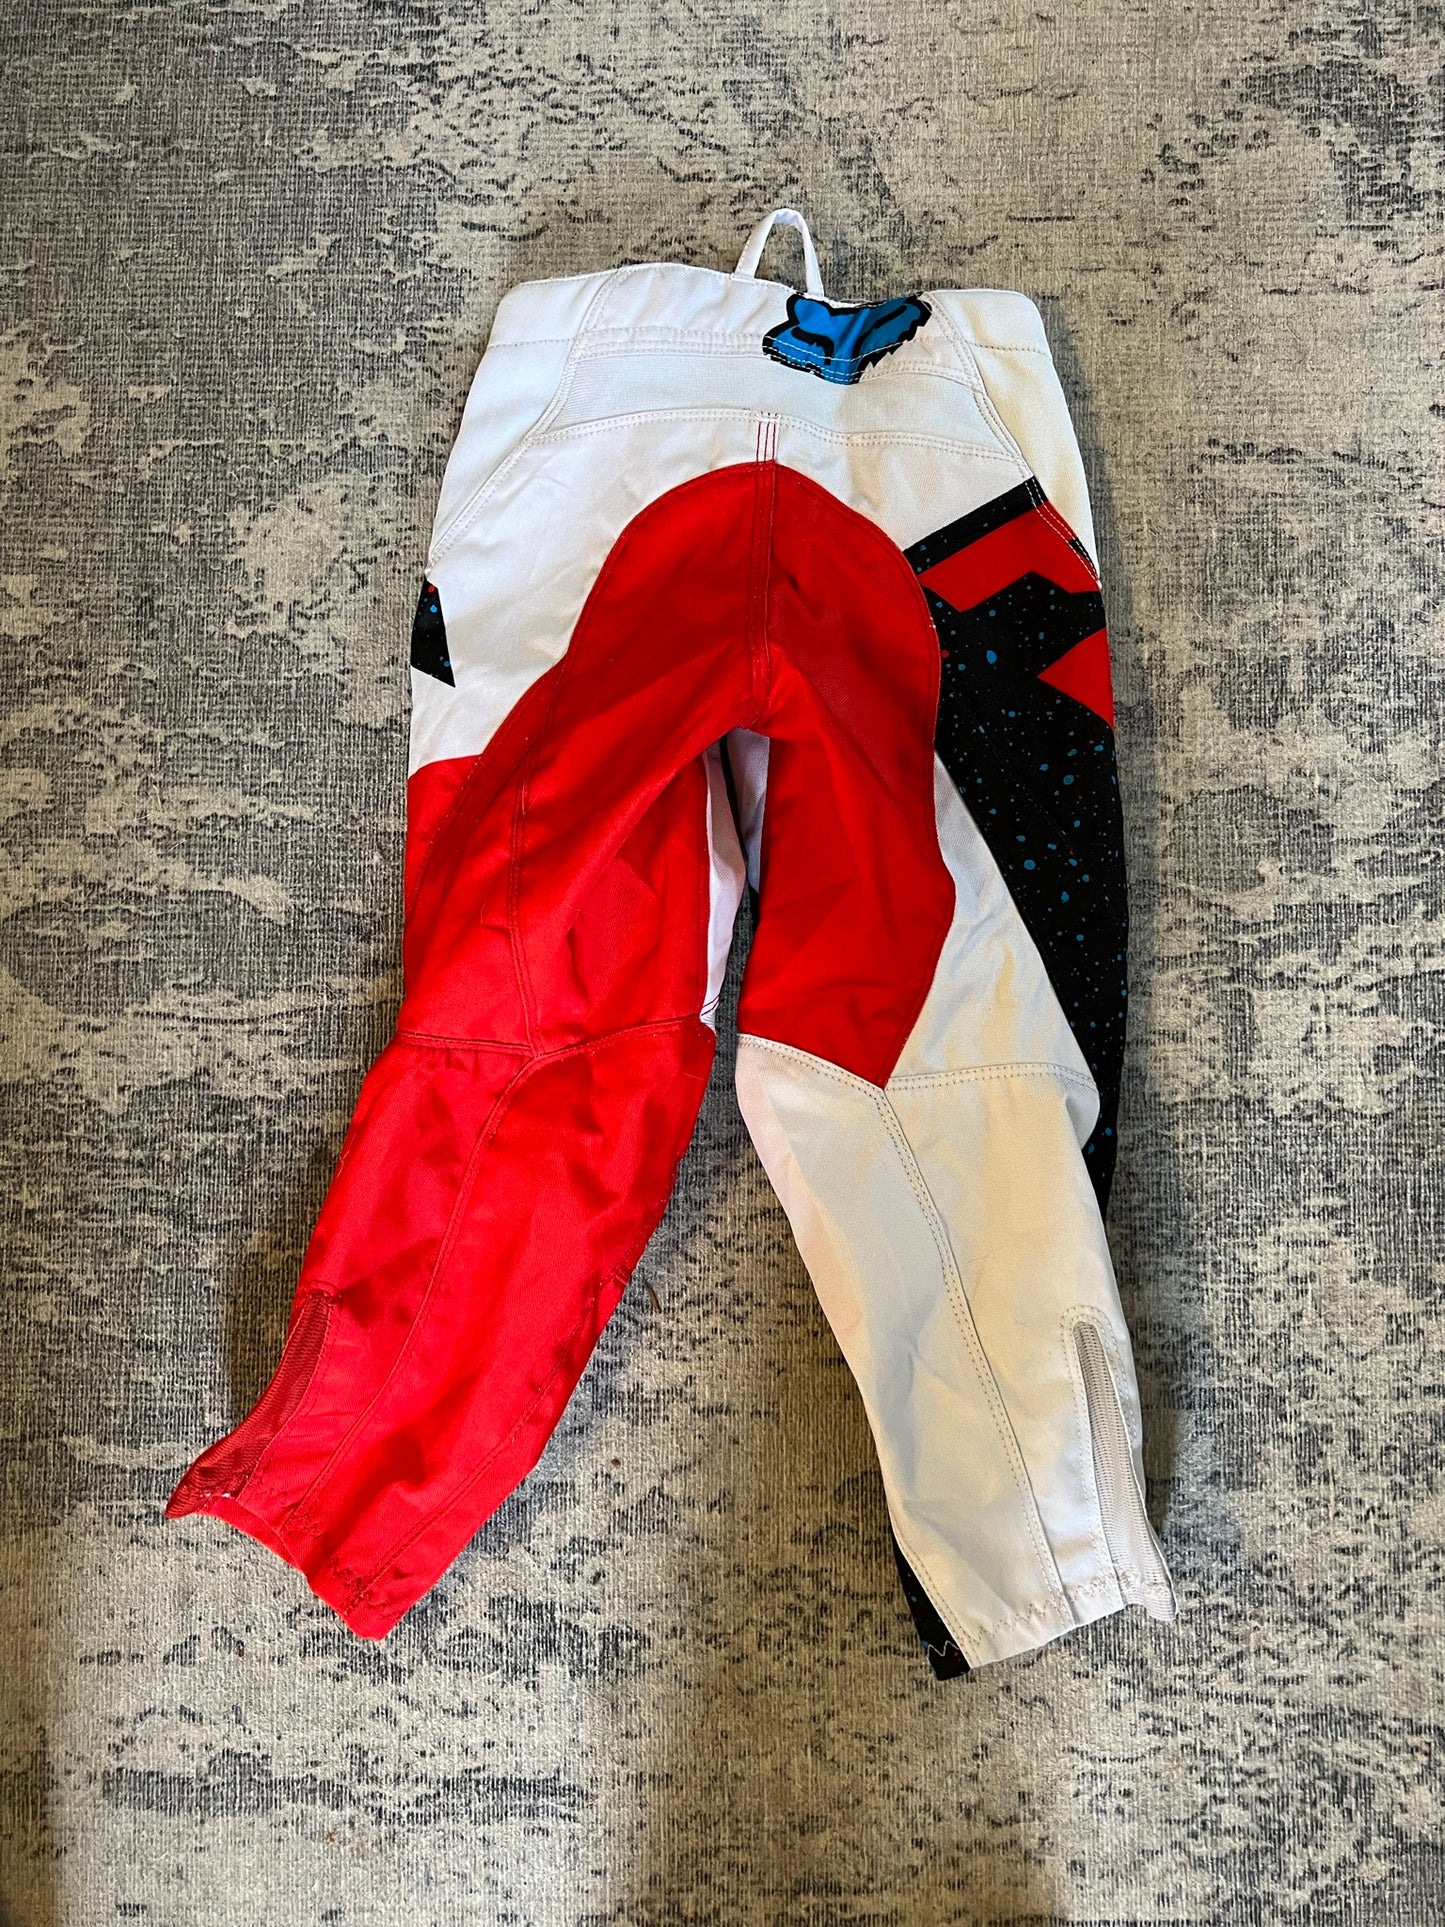 Motocross BMX Dirt Bike Child Size 5 Fox Pants Red White Black NEW